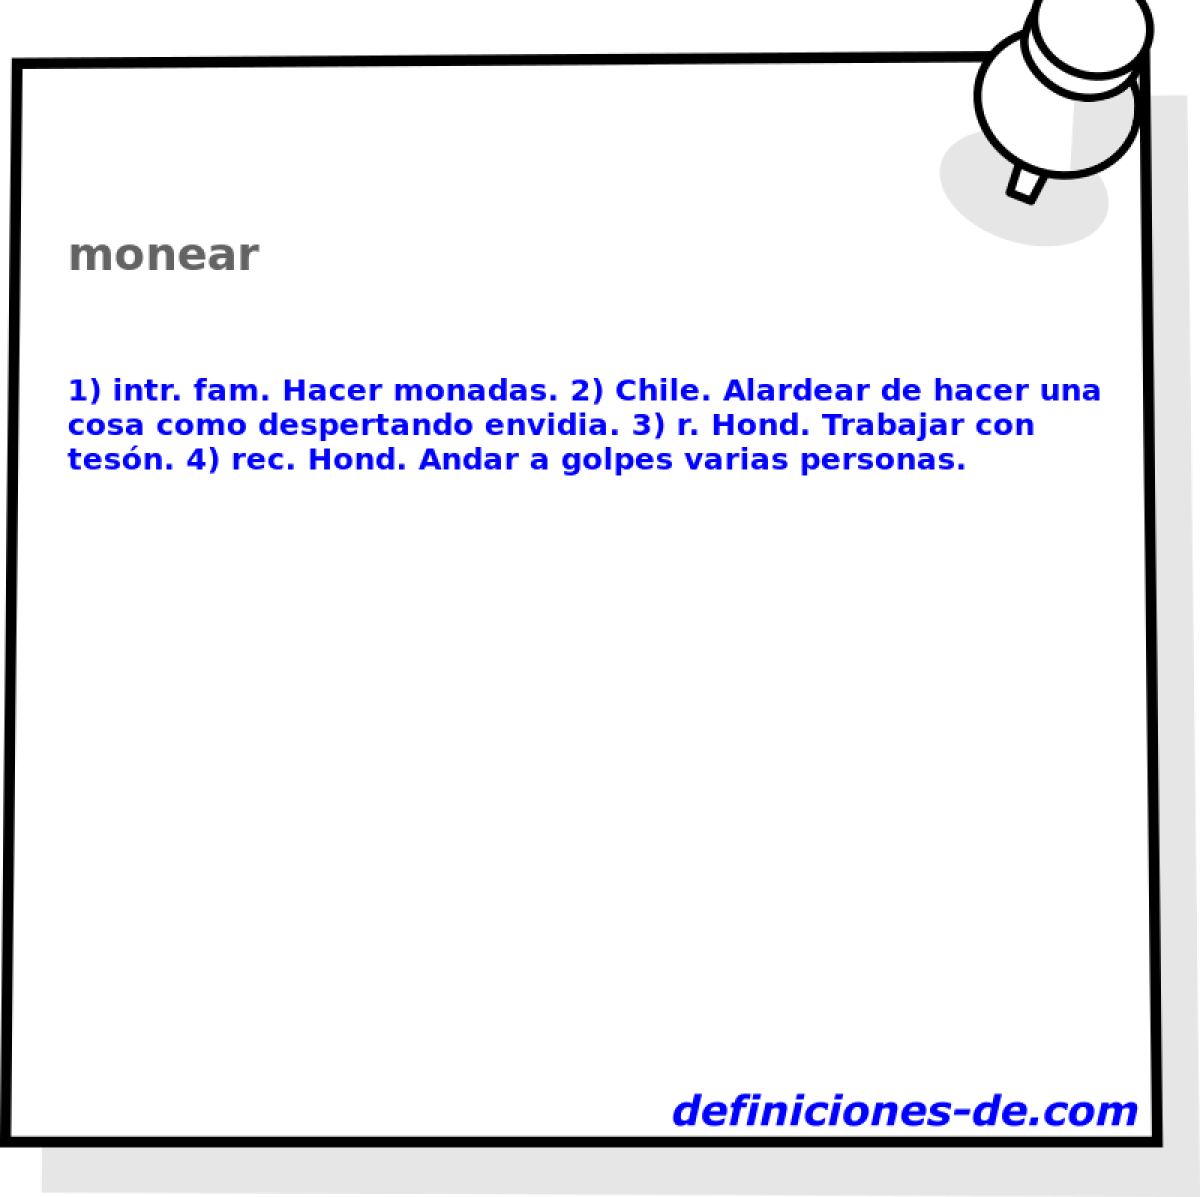 monear 